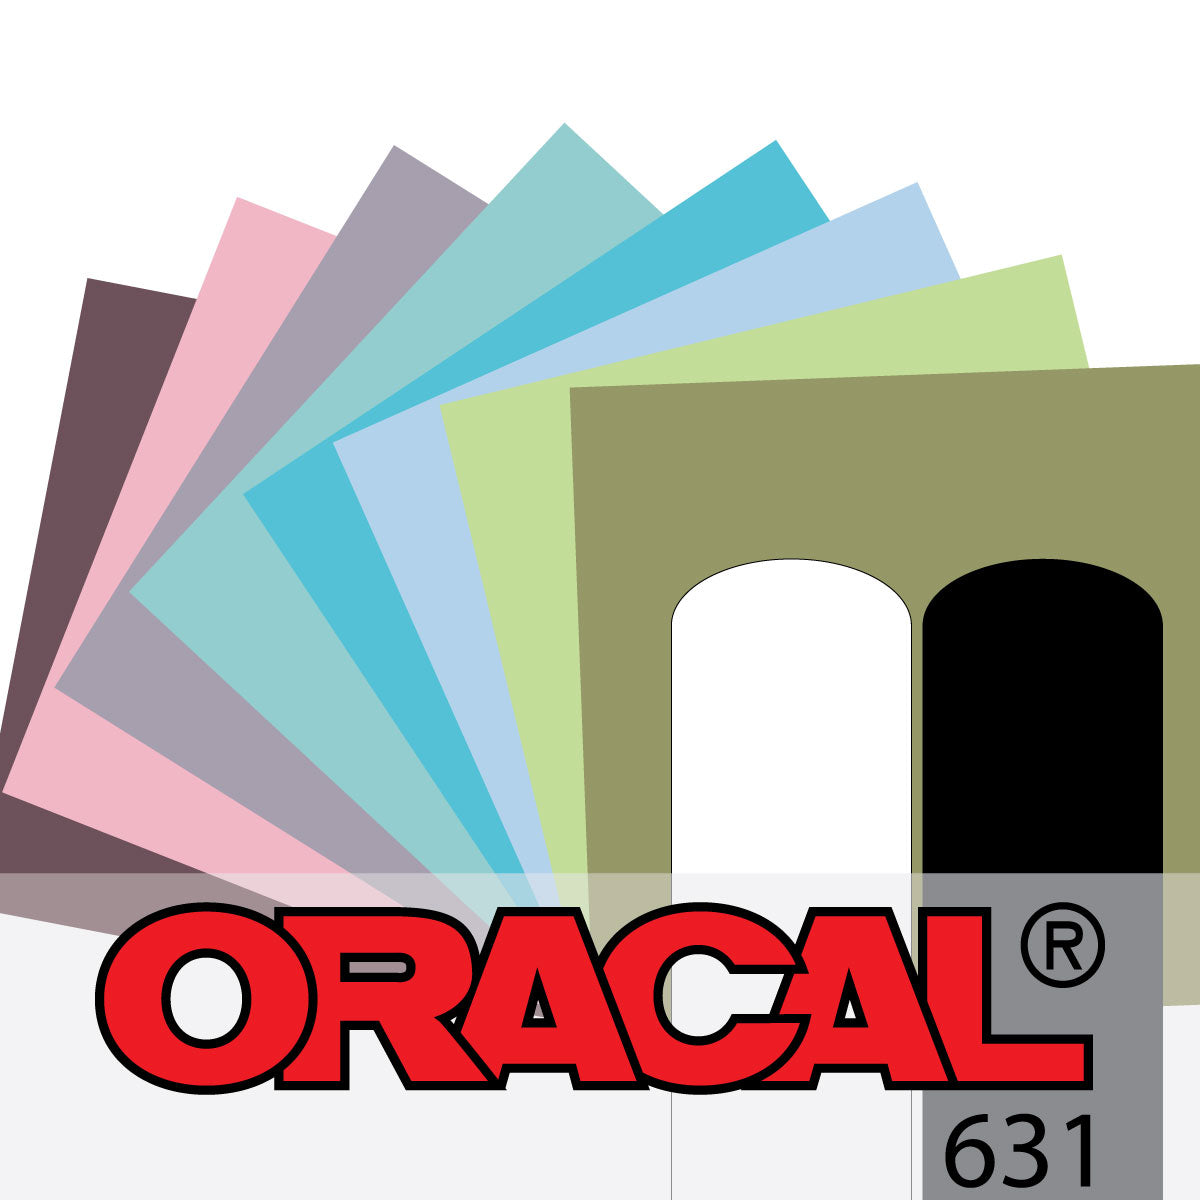 12 ORACAL 631 Removable Adhesive Indoor/ Outdoor Vinyl